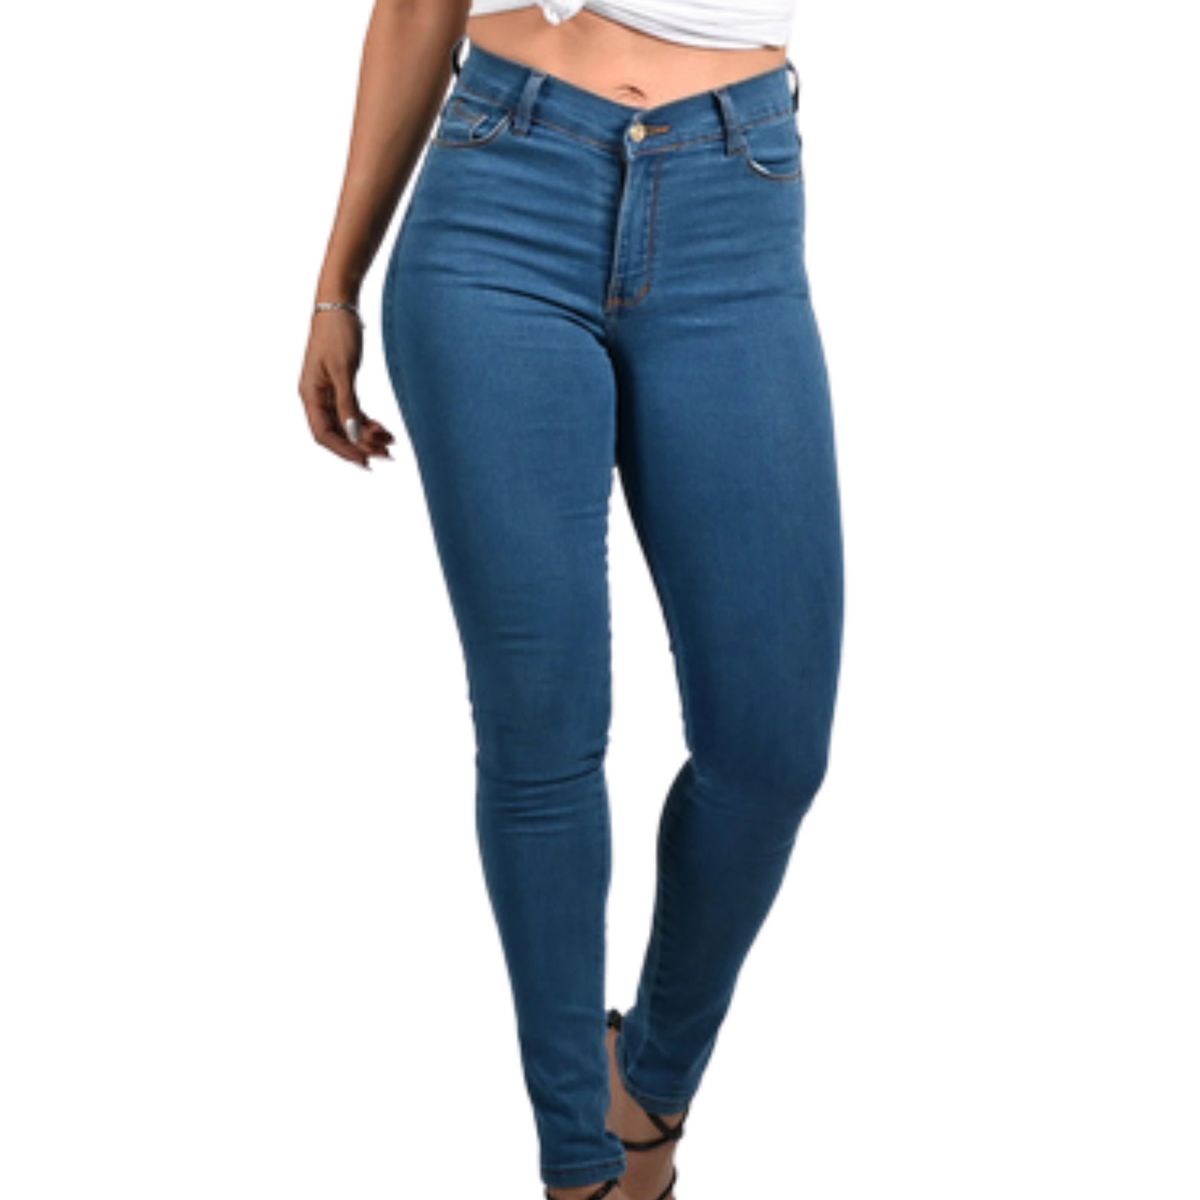 Jeans Clásicos CLR103 AZ a la cintura